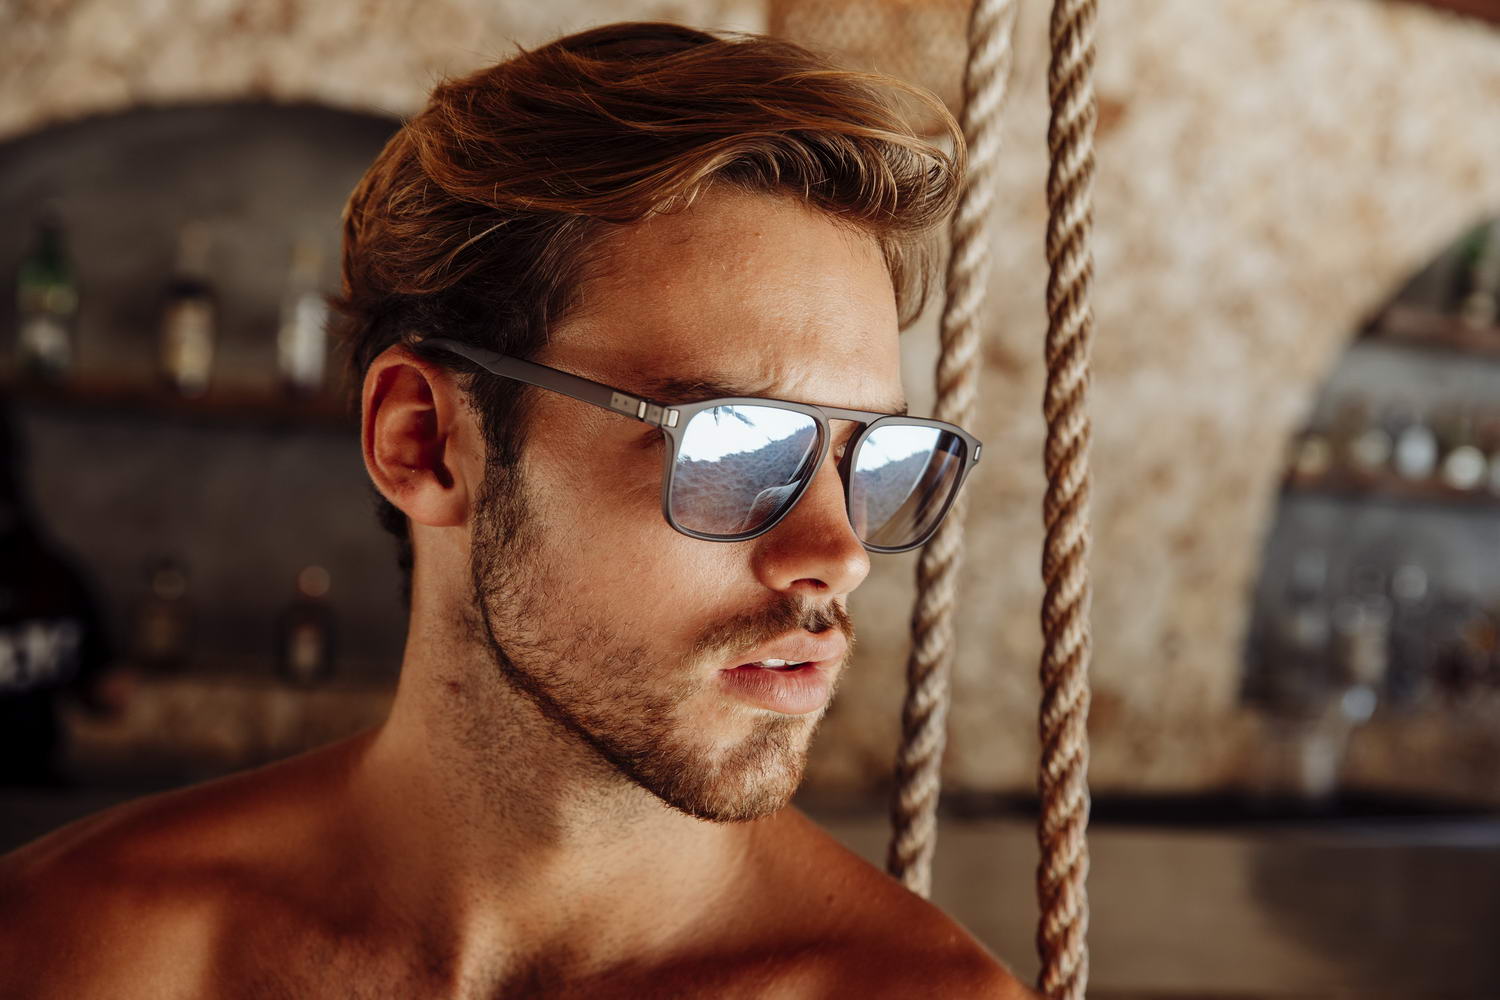 Monaco Reflectivos - Sunnies Sunglasses Costa Rica